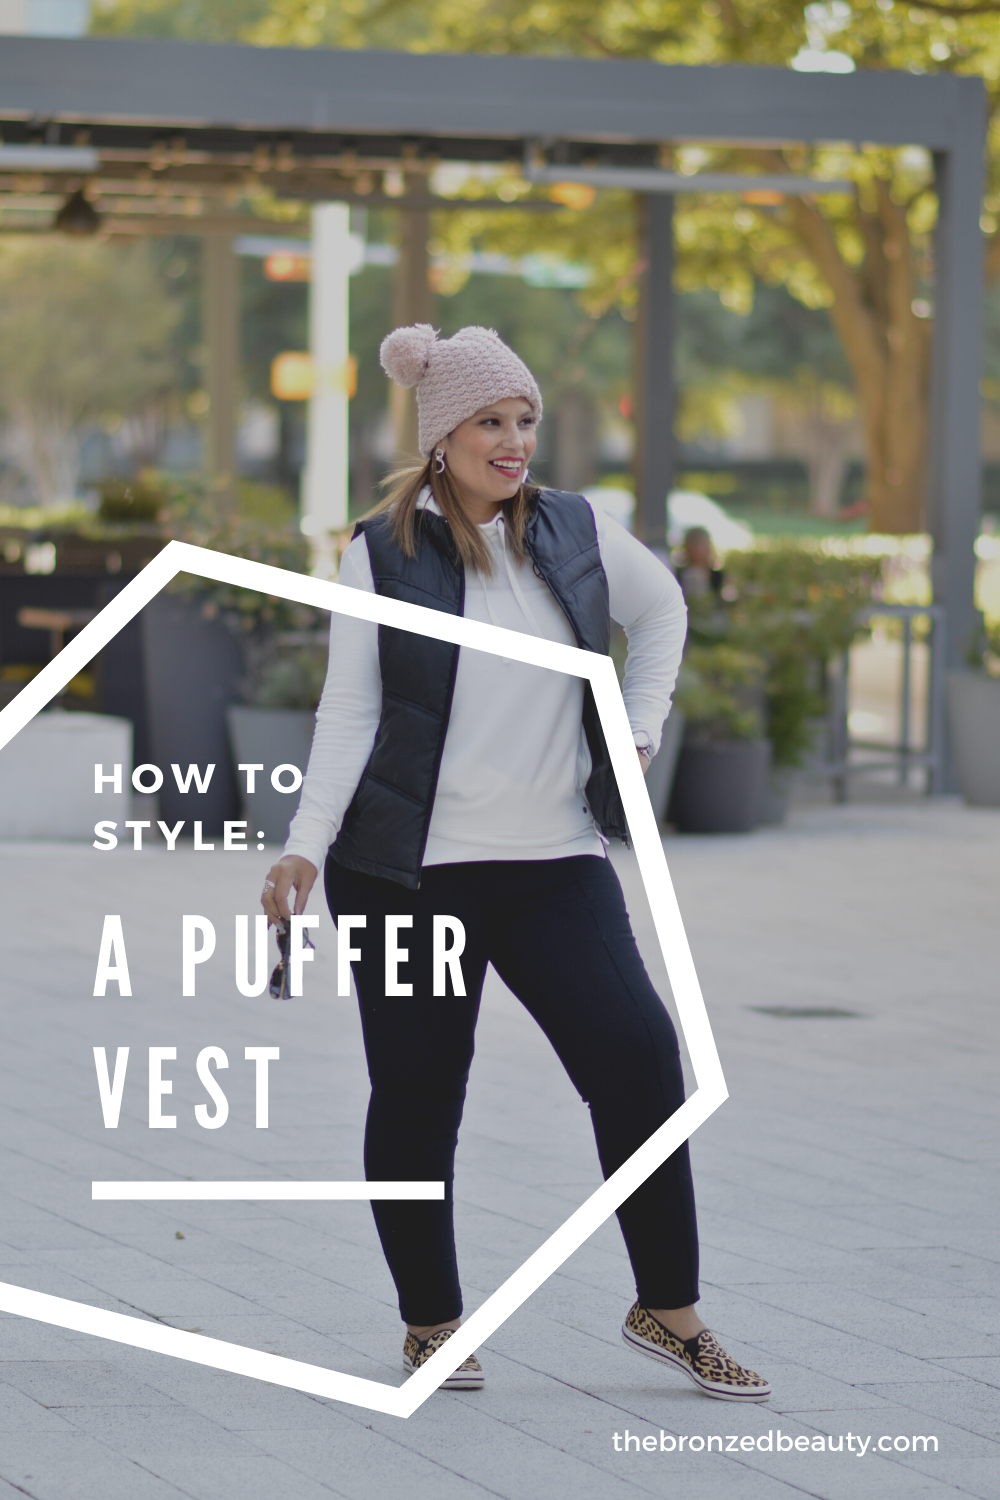 4 Chic Ways to Wear a Puffer Vest